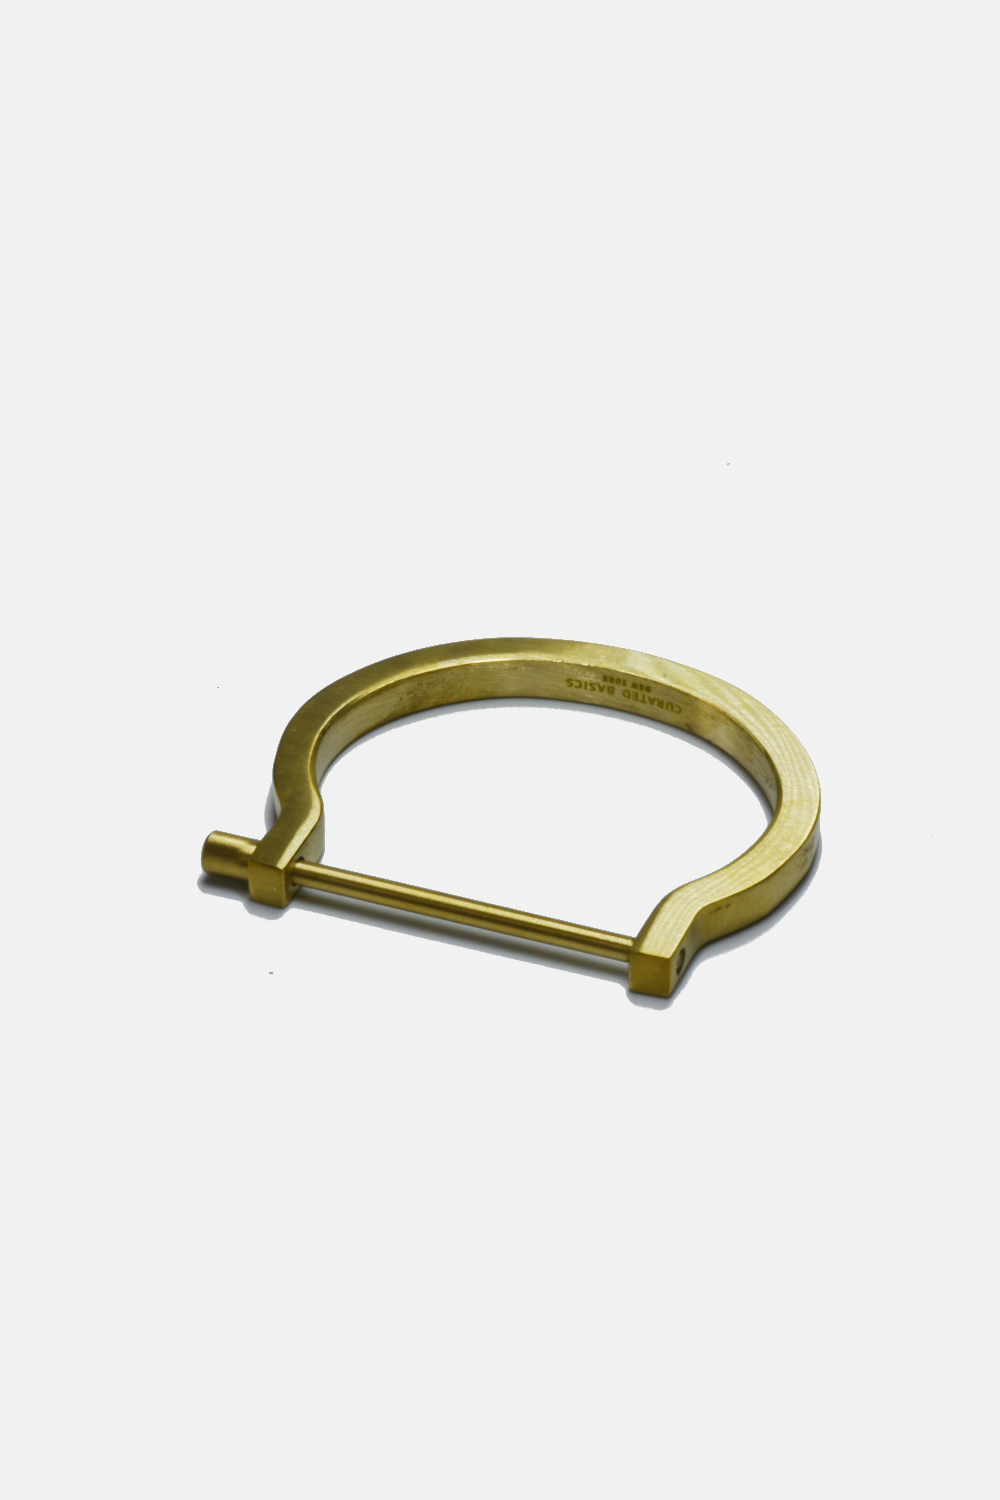 Curated Basics - Brass Screw Bracelet: 6in